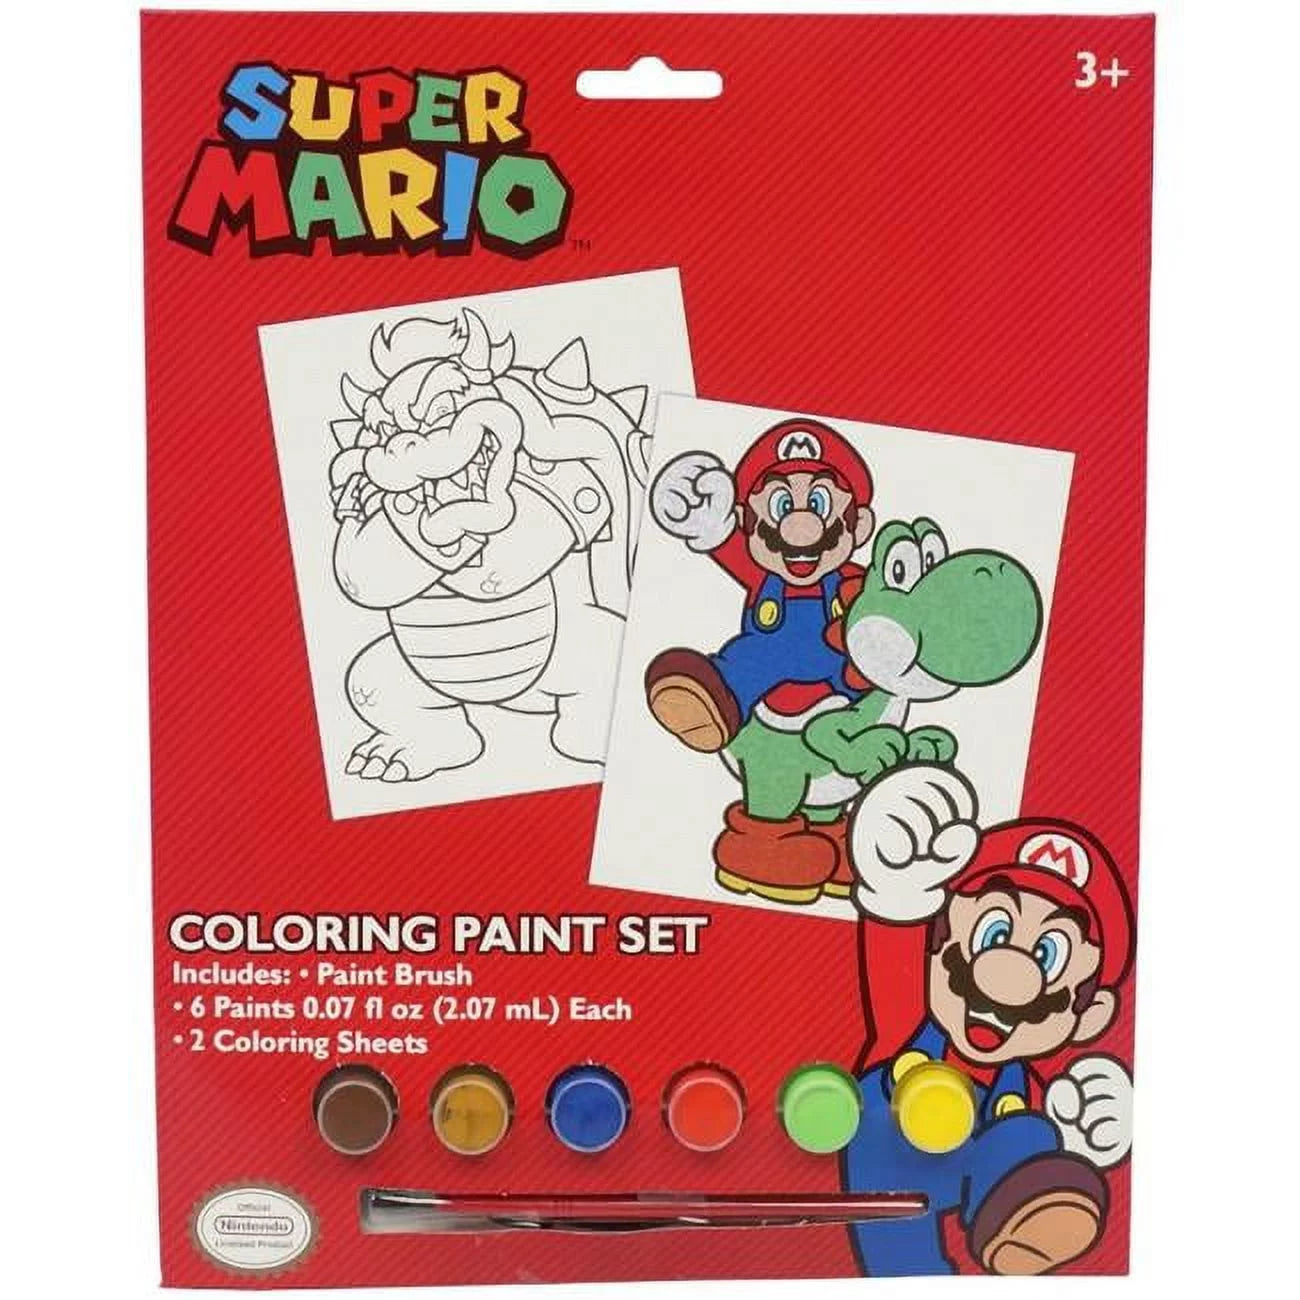 Super Mario Coloring Paint Kit